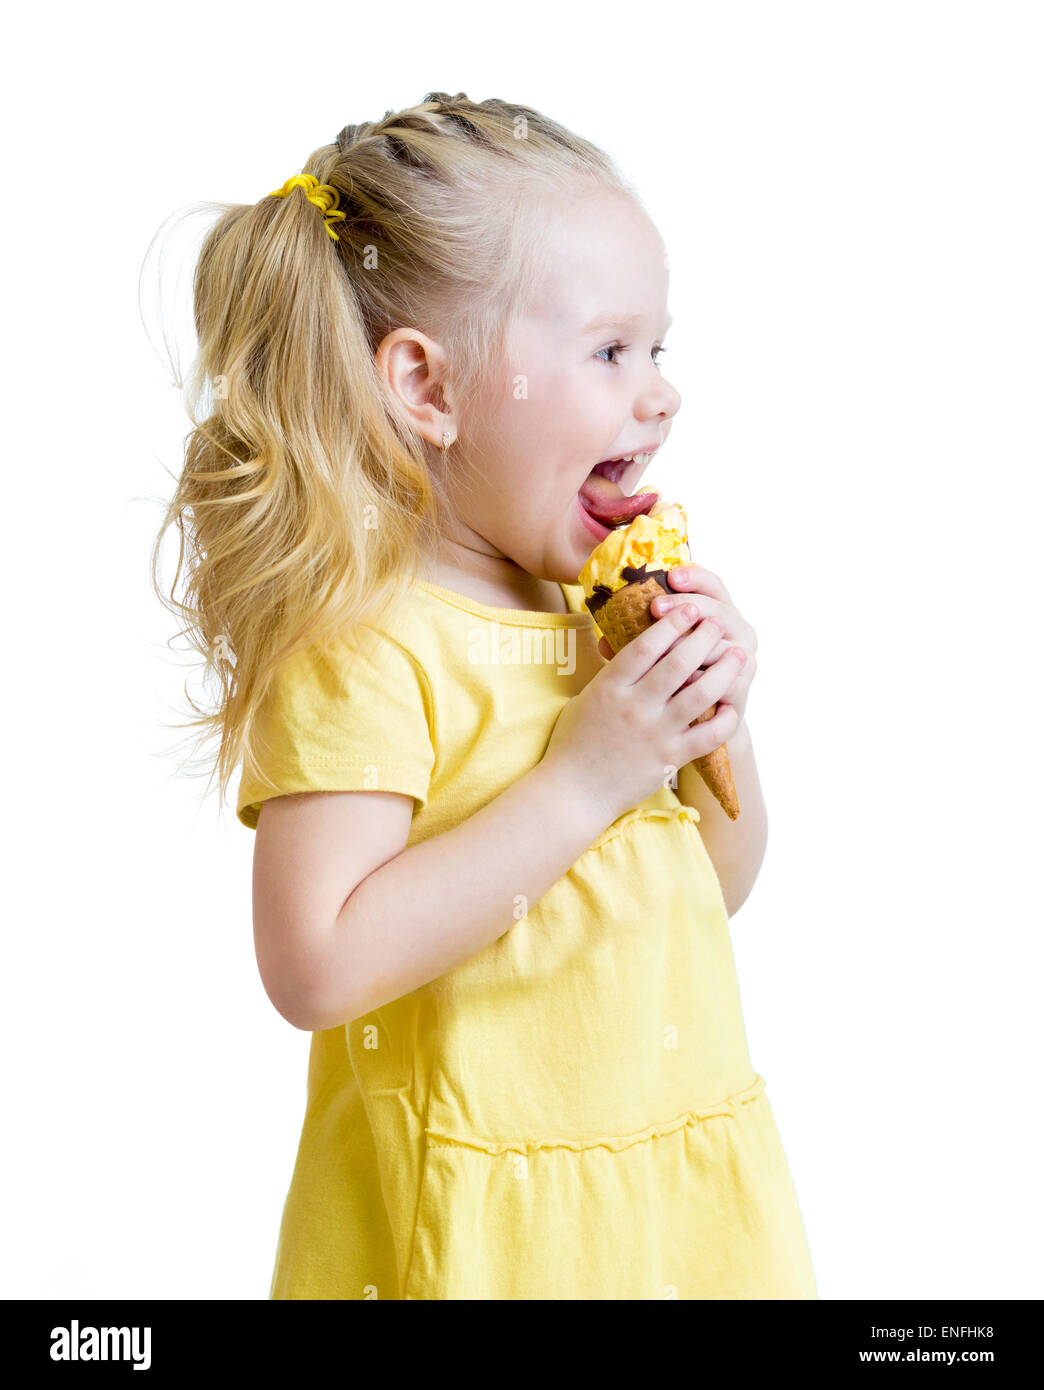 child girl eating ice-cream in studio isolated Stock Photo